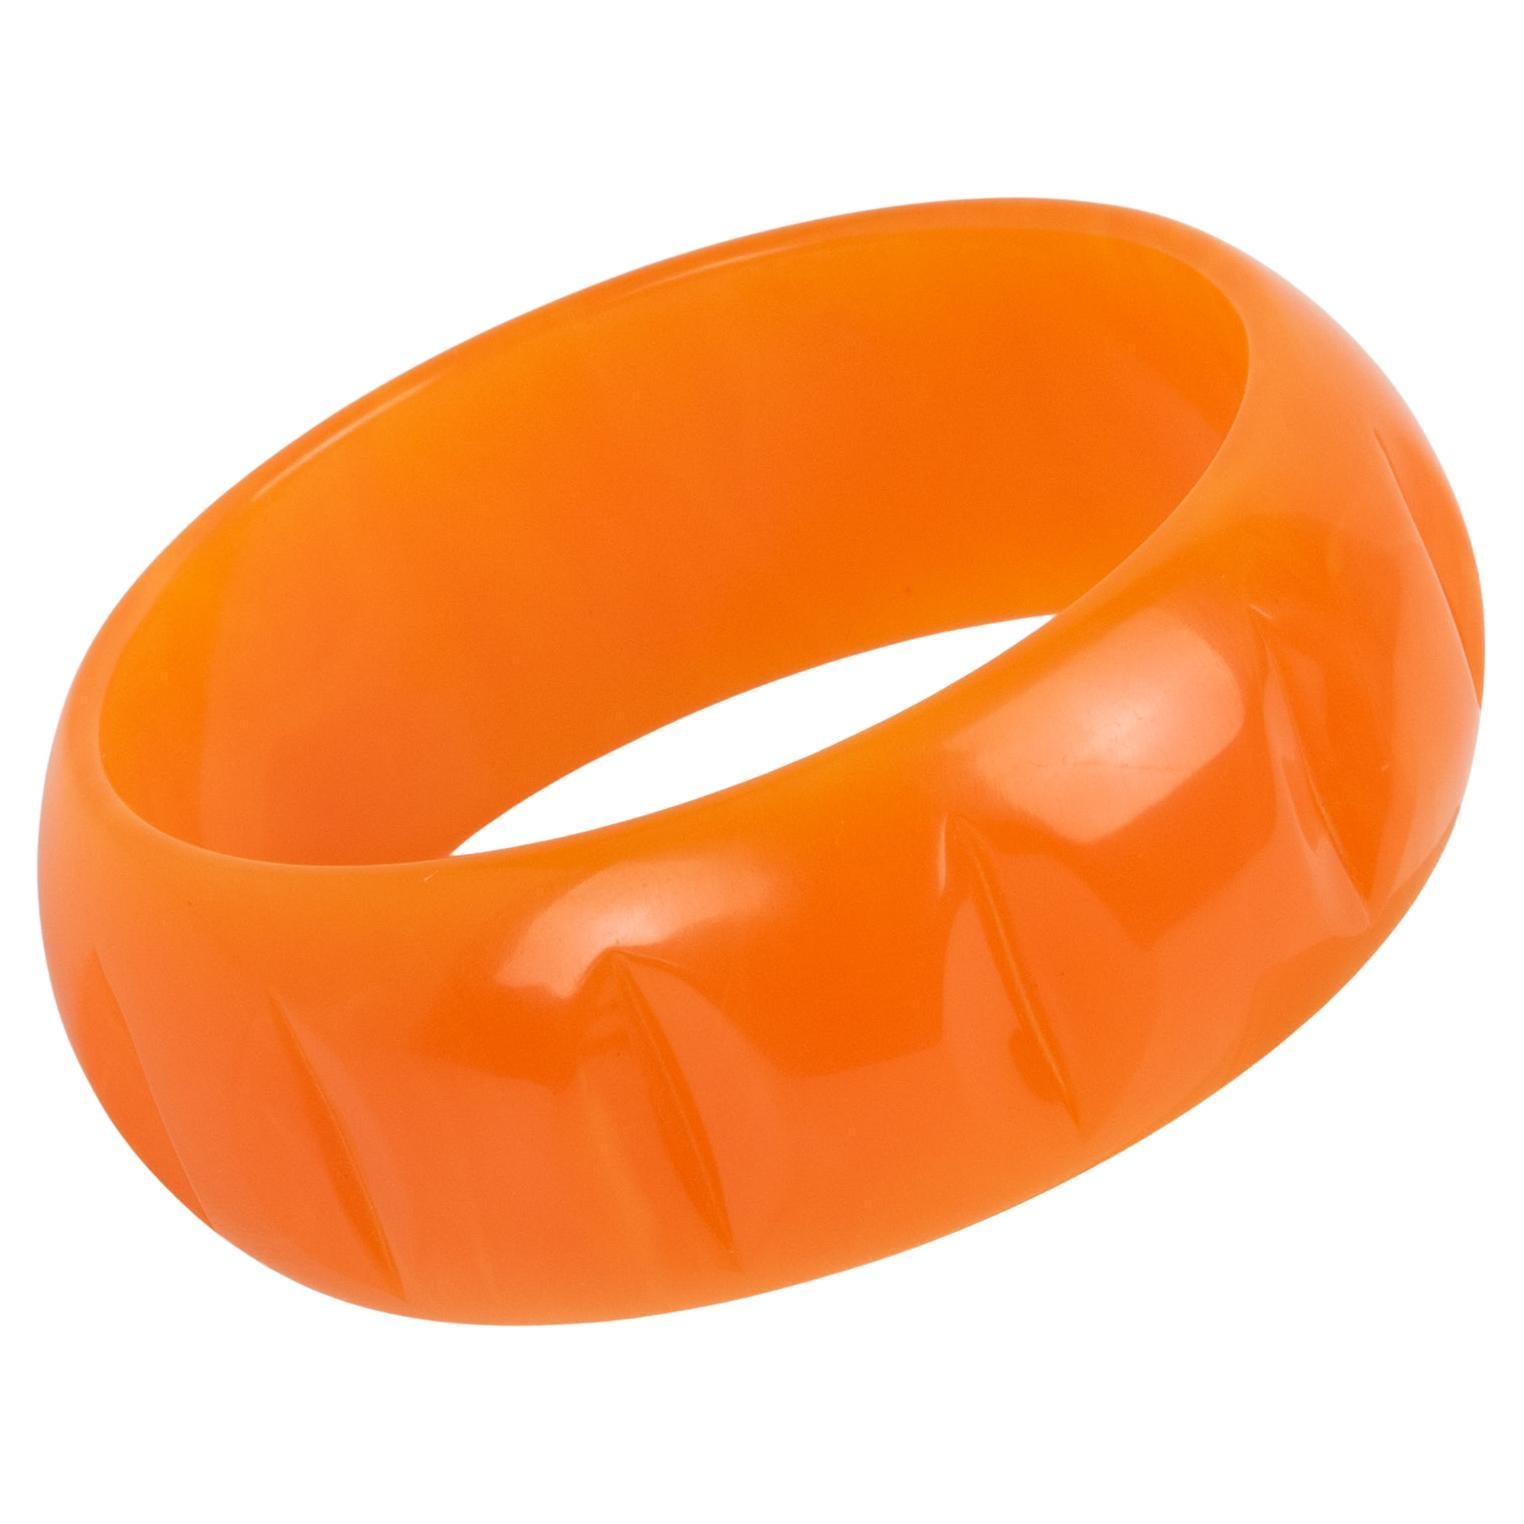 Bakelite Bracelet Carved Bangle Orange Tangerine Marble For Sale